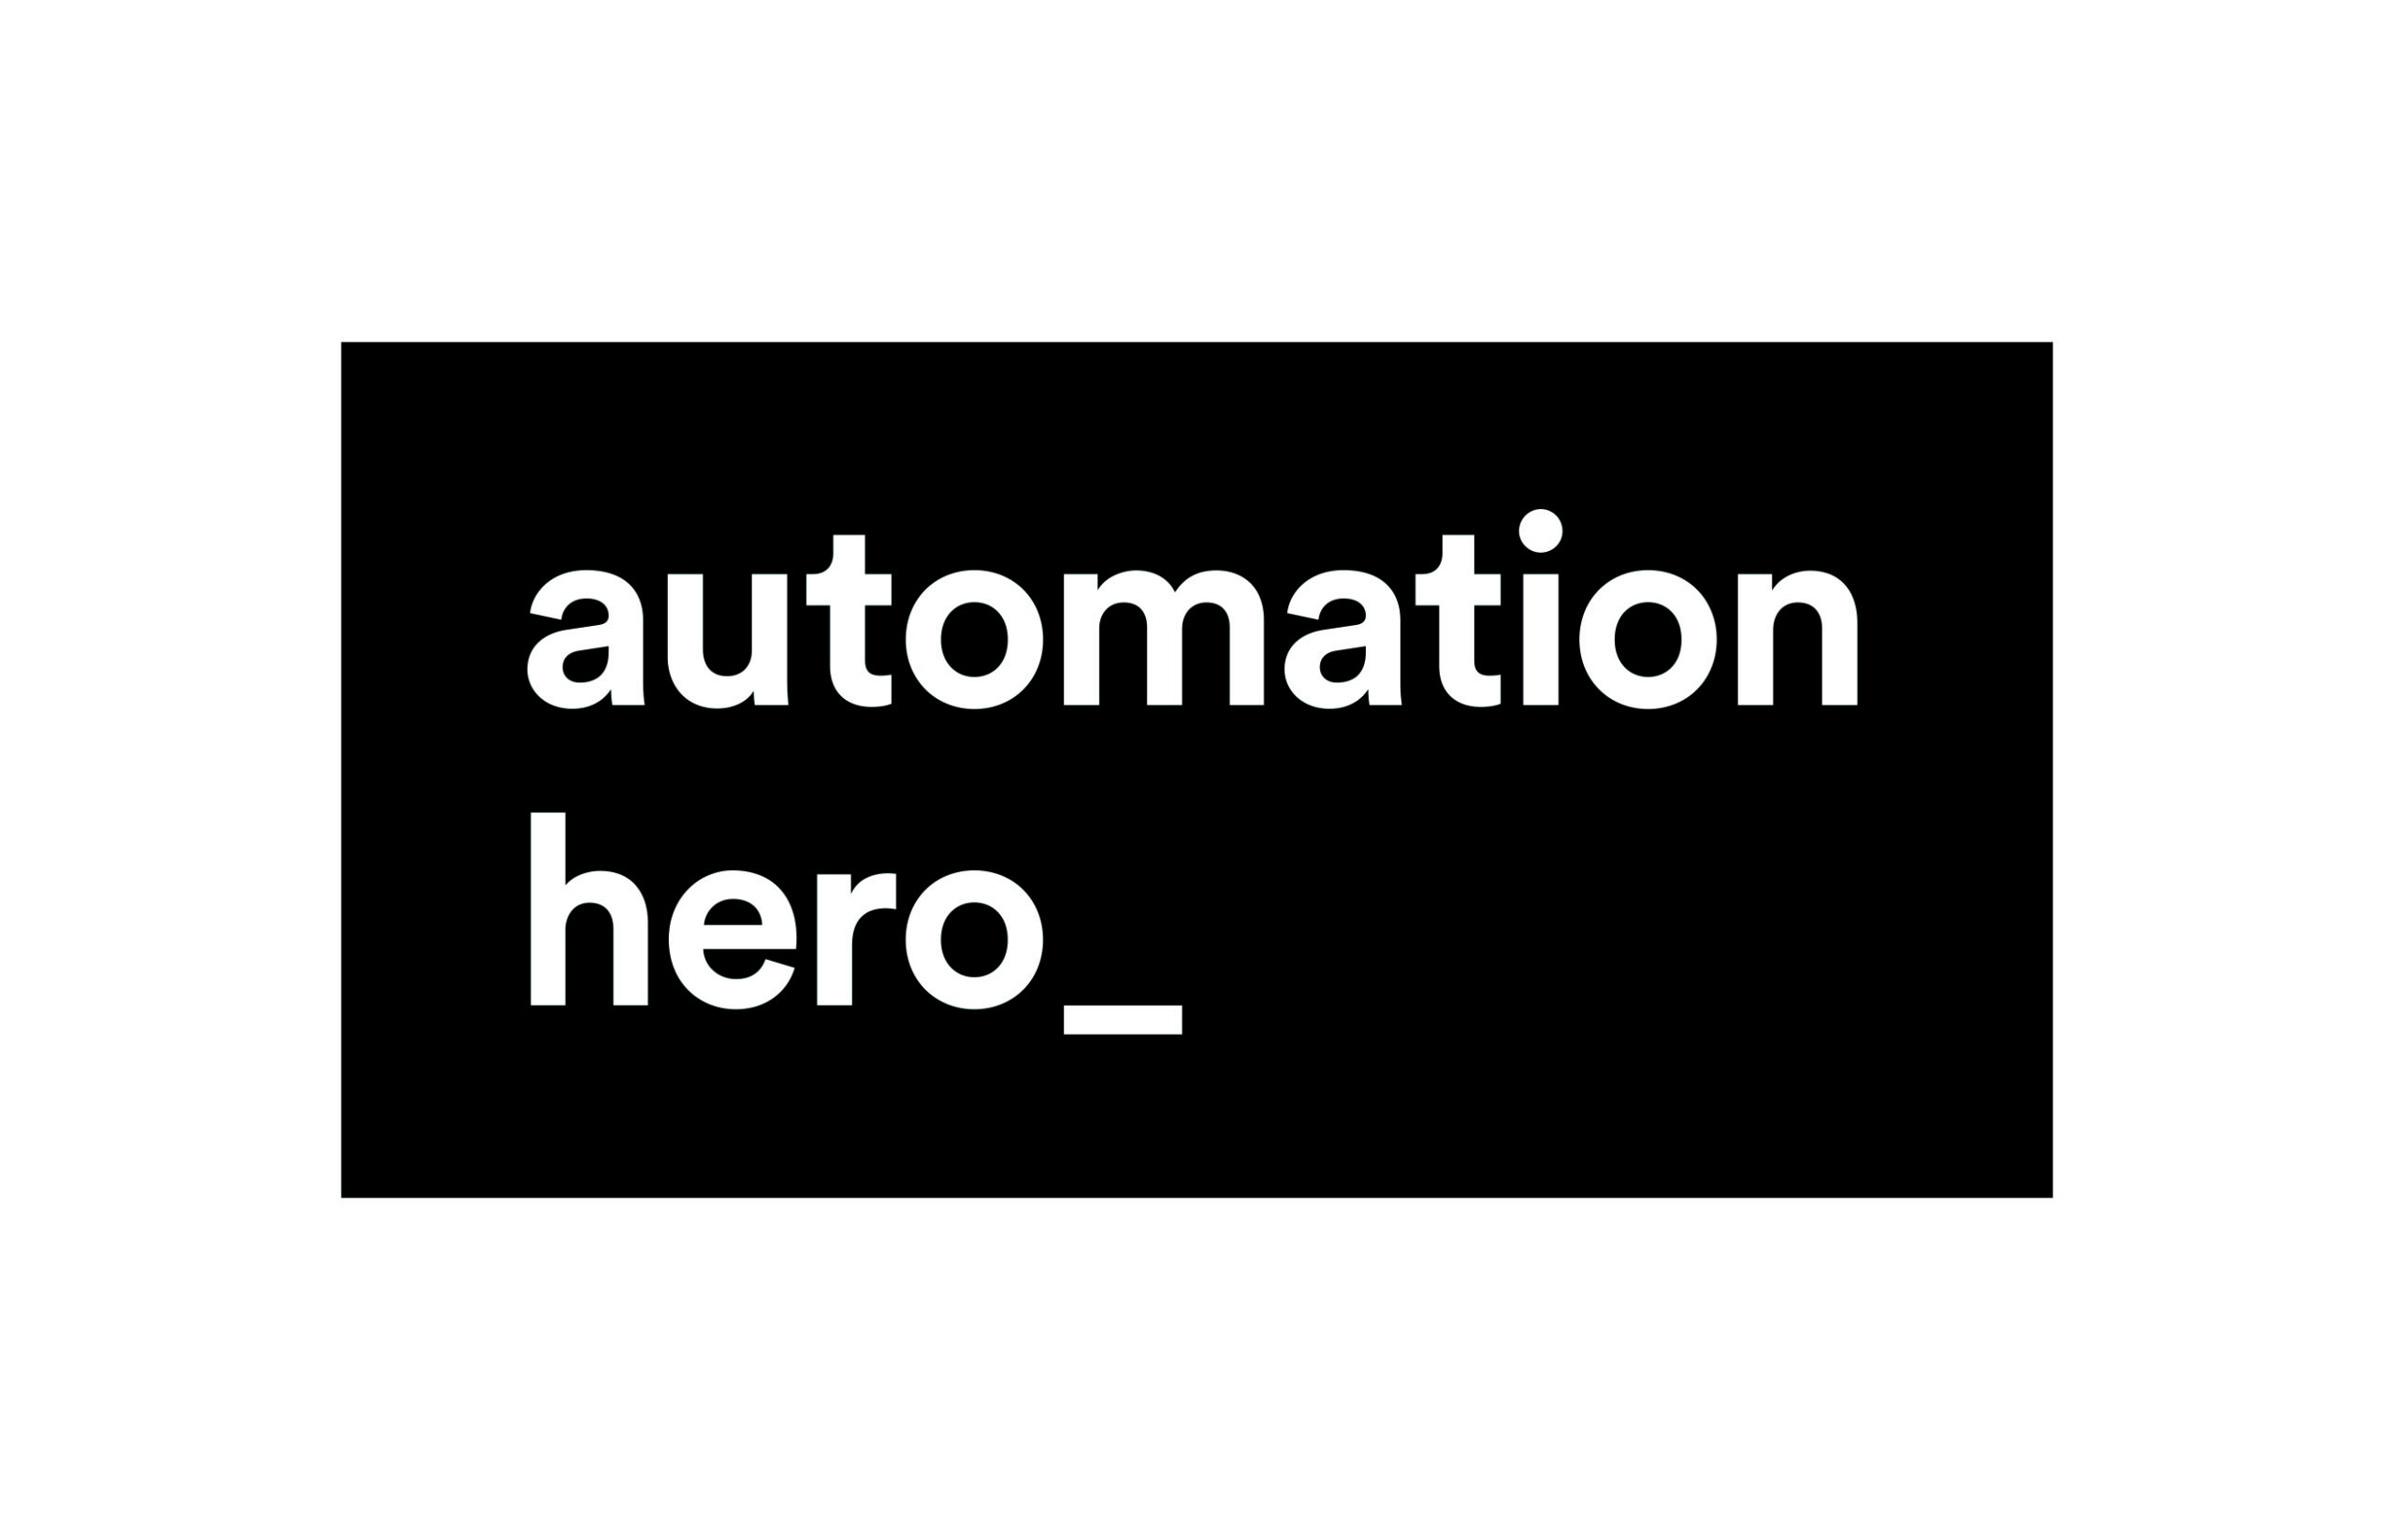 Automation Hero logo
